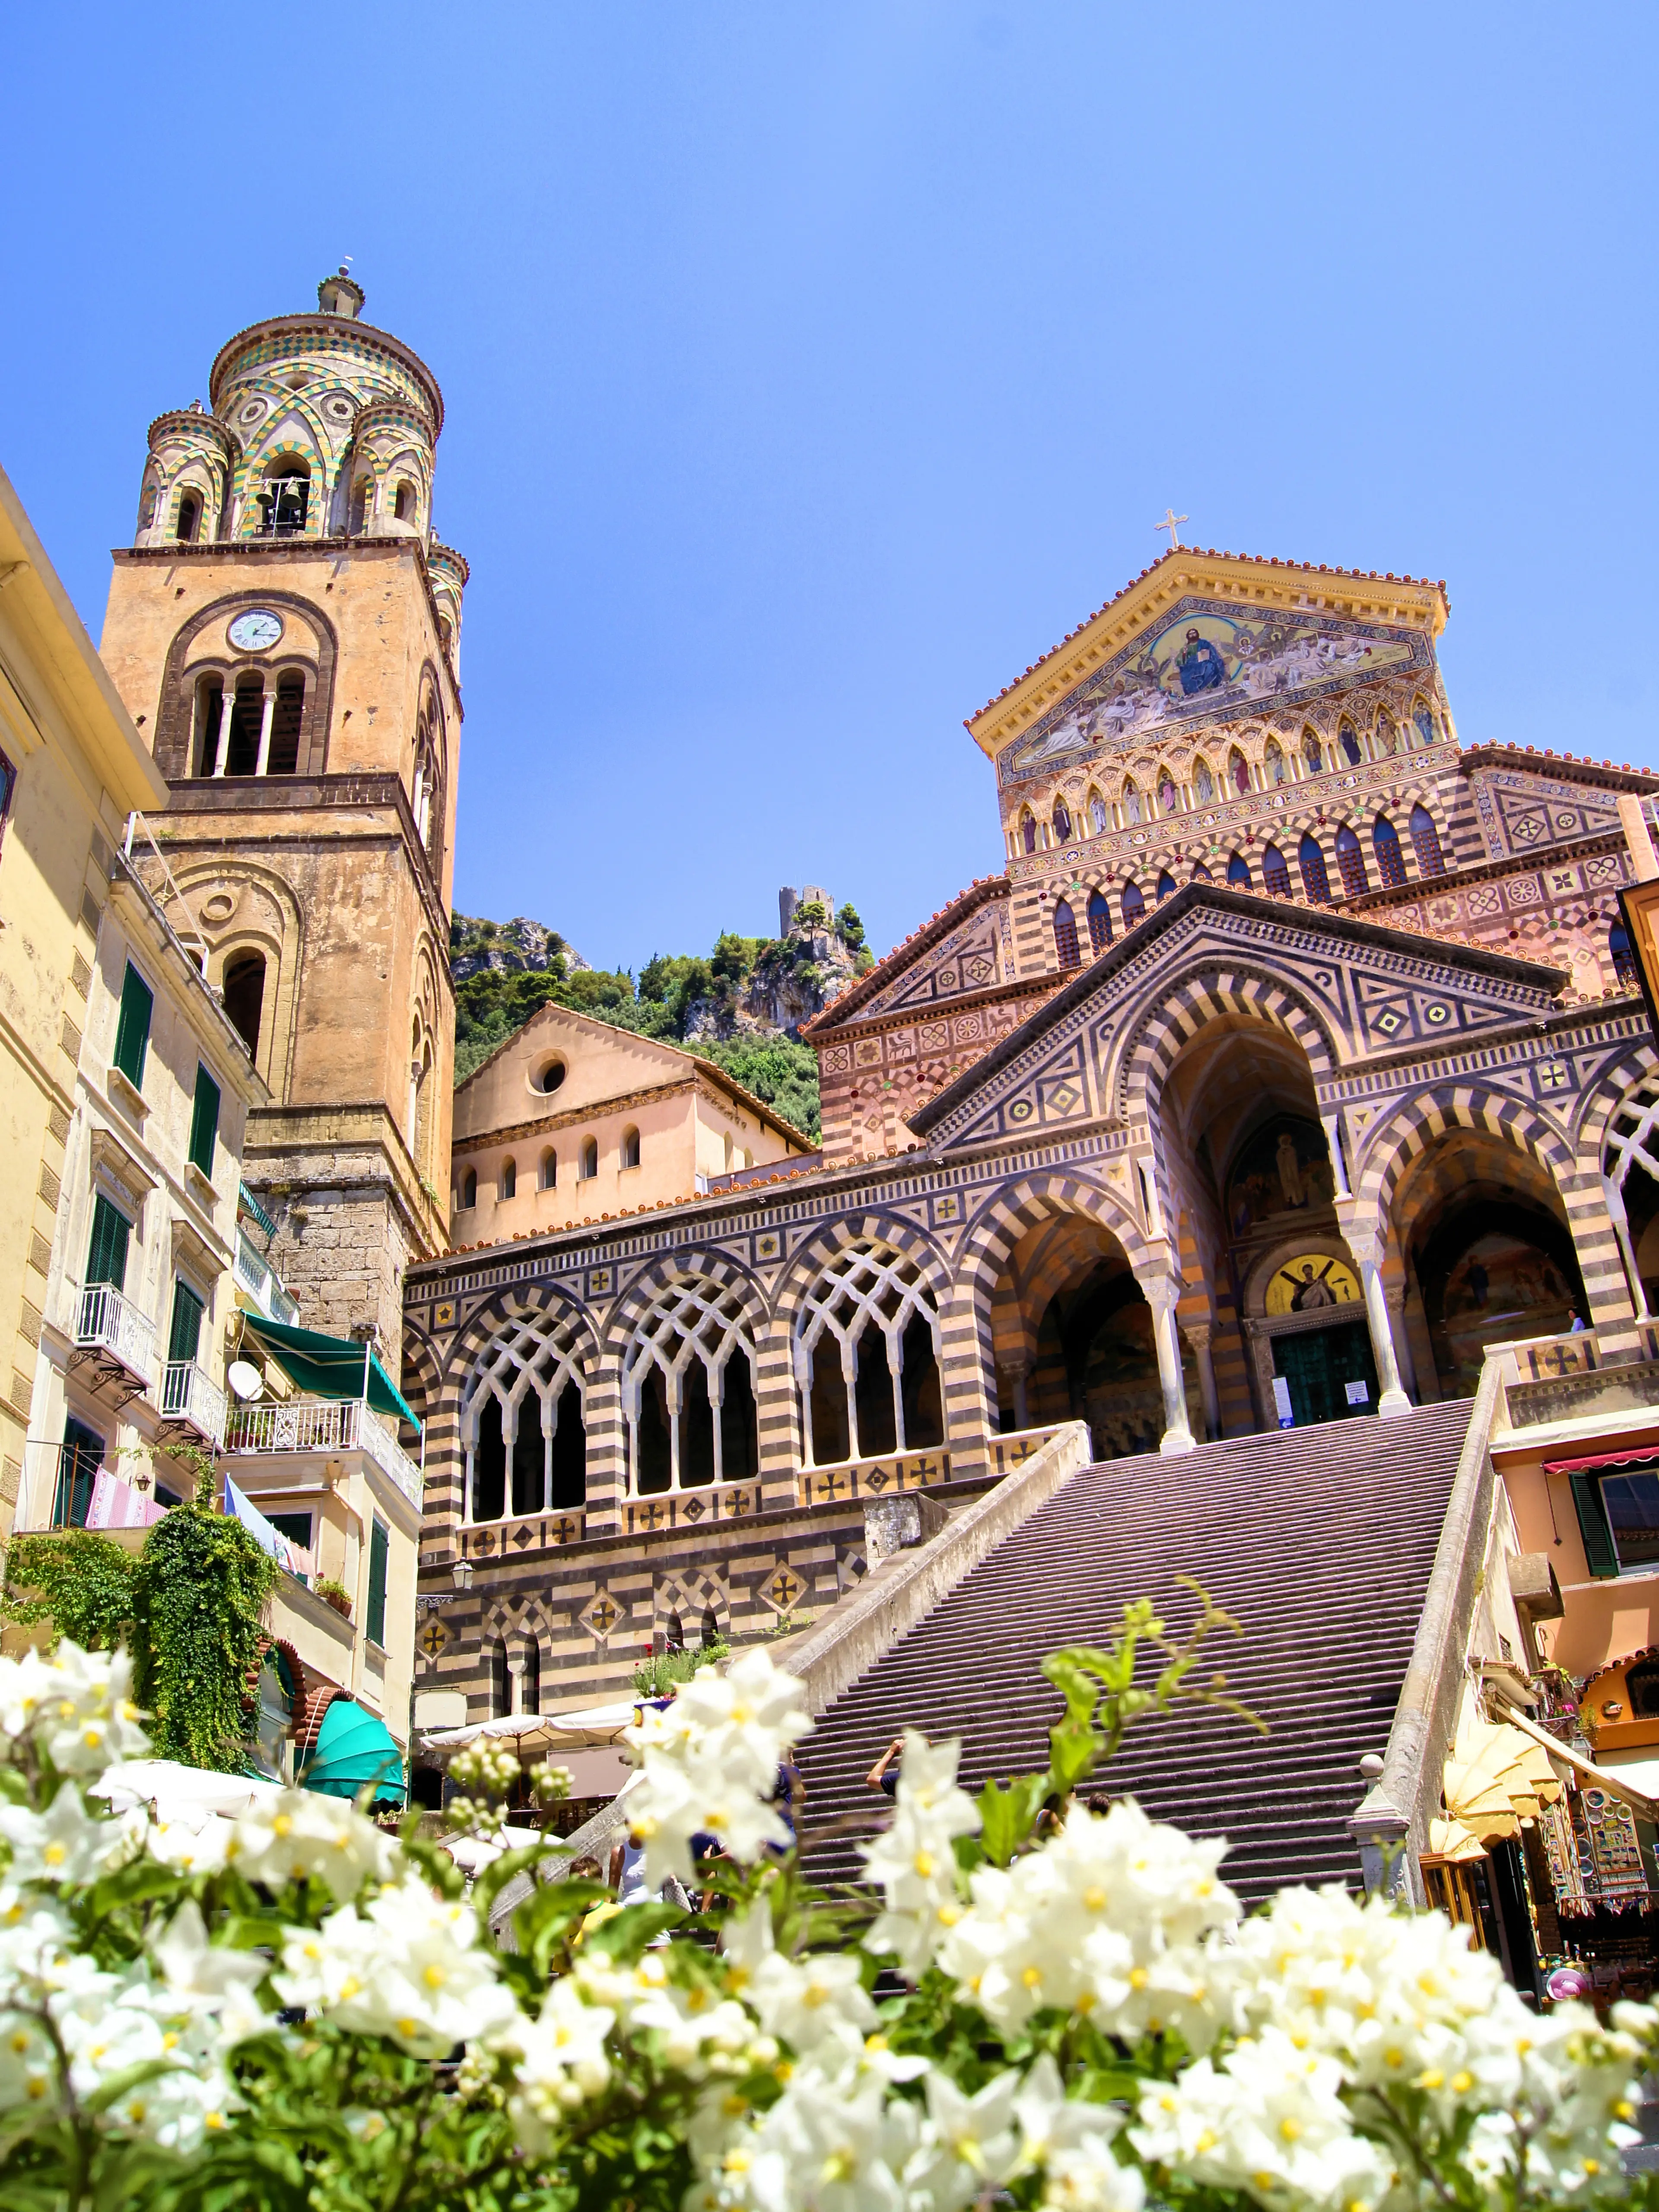 2-Day Unforgettable Journey Through Amalfi Coast, Italy